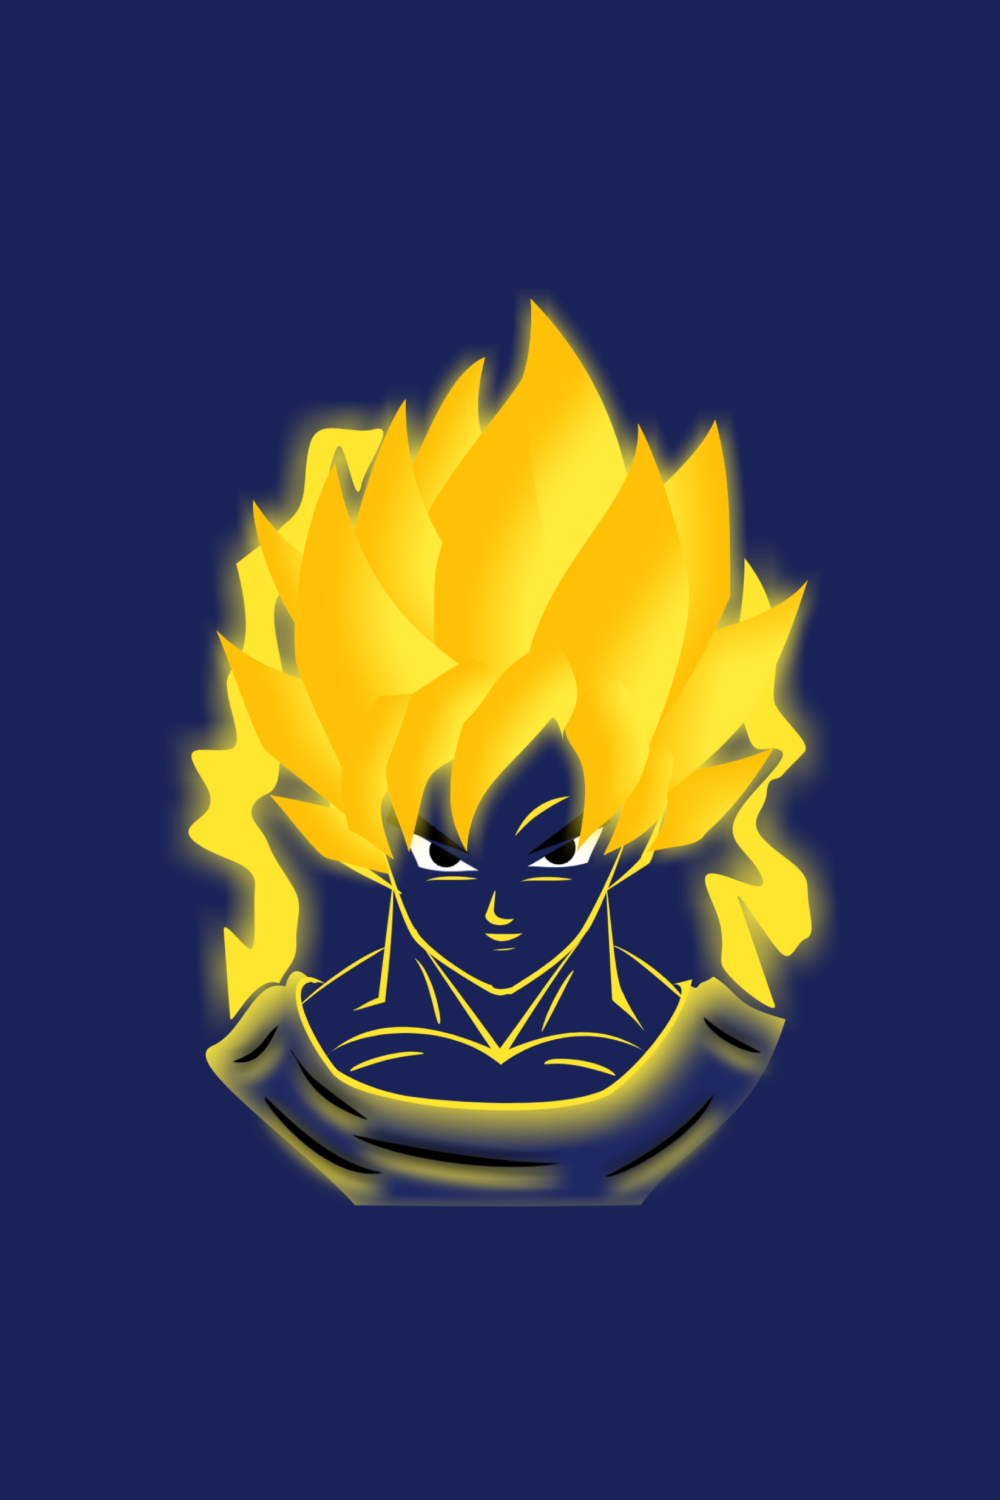 Anime art Goku Design pinterest image.